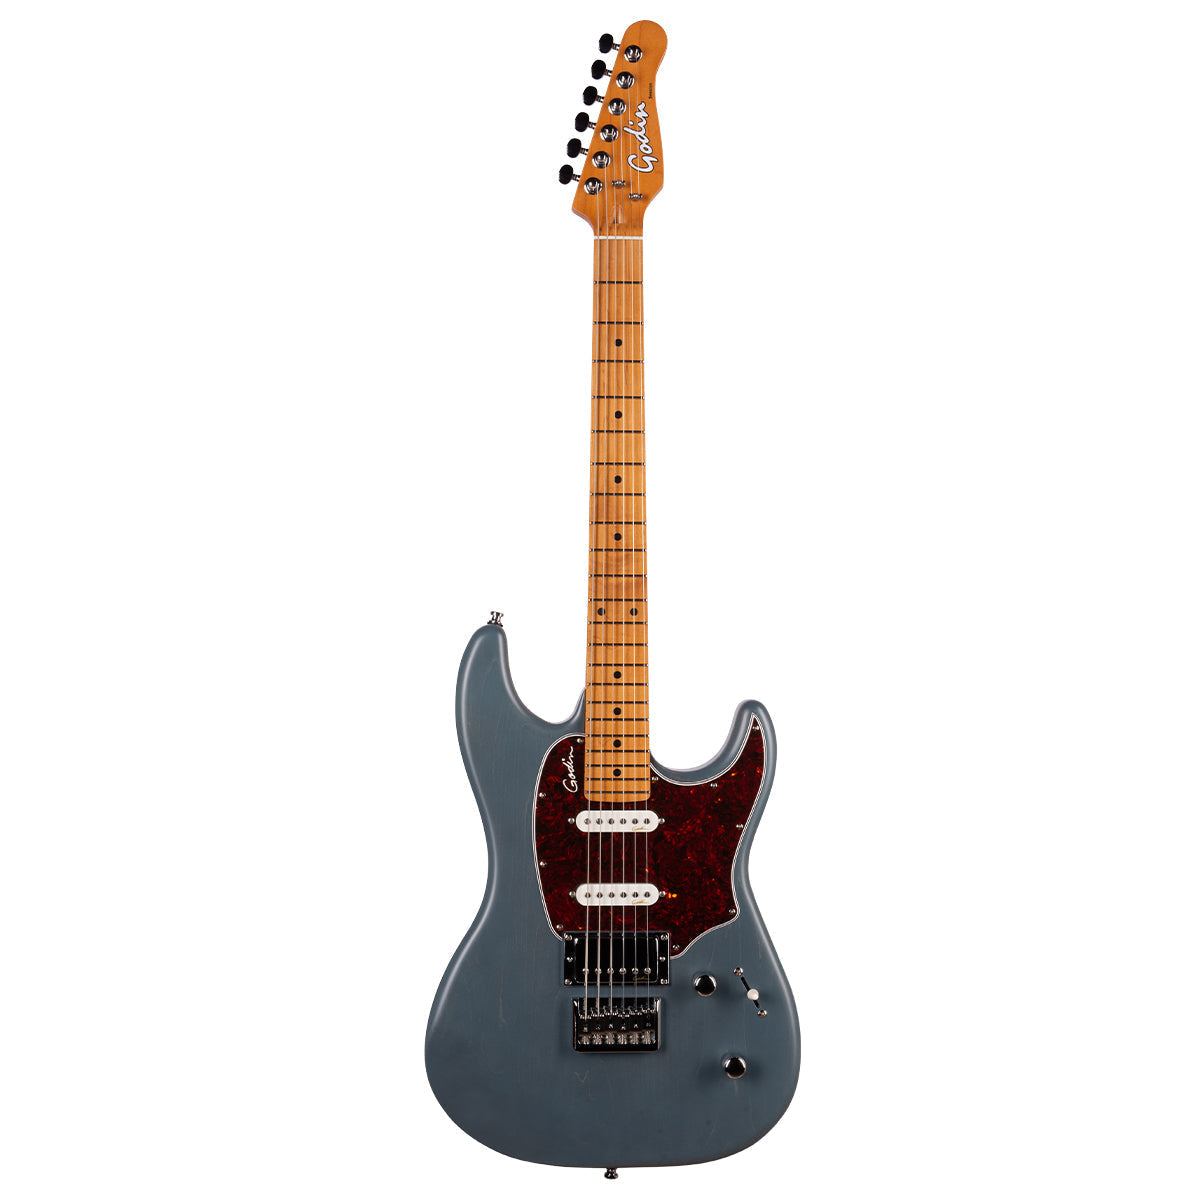 Godin Session HT Electric Guitar ~ Arctik Blue MN, Electric Guitar for sale at Richards Guitars.